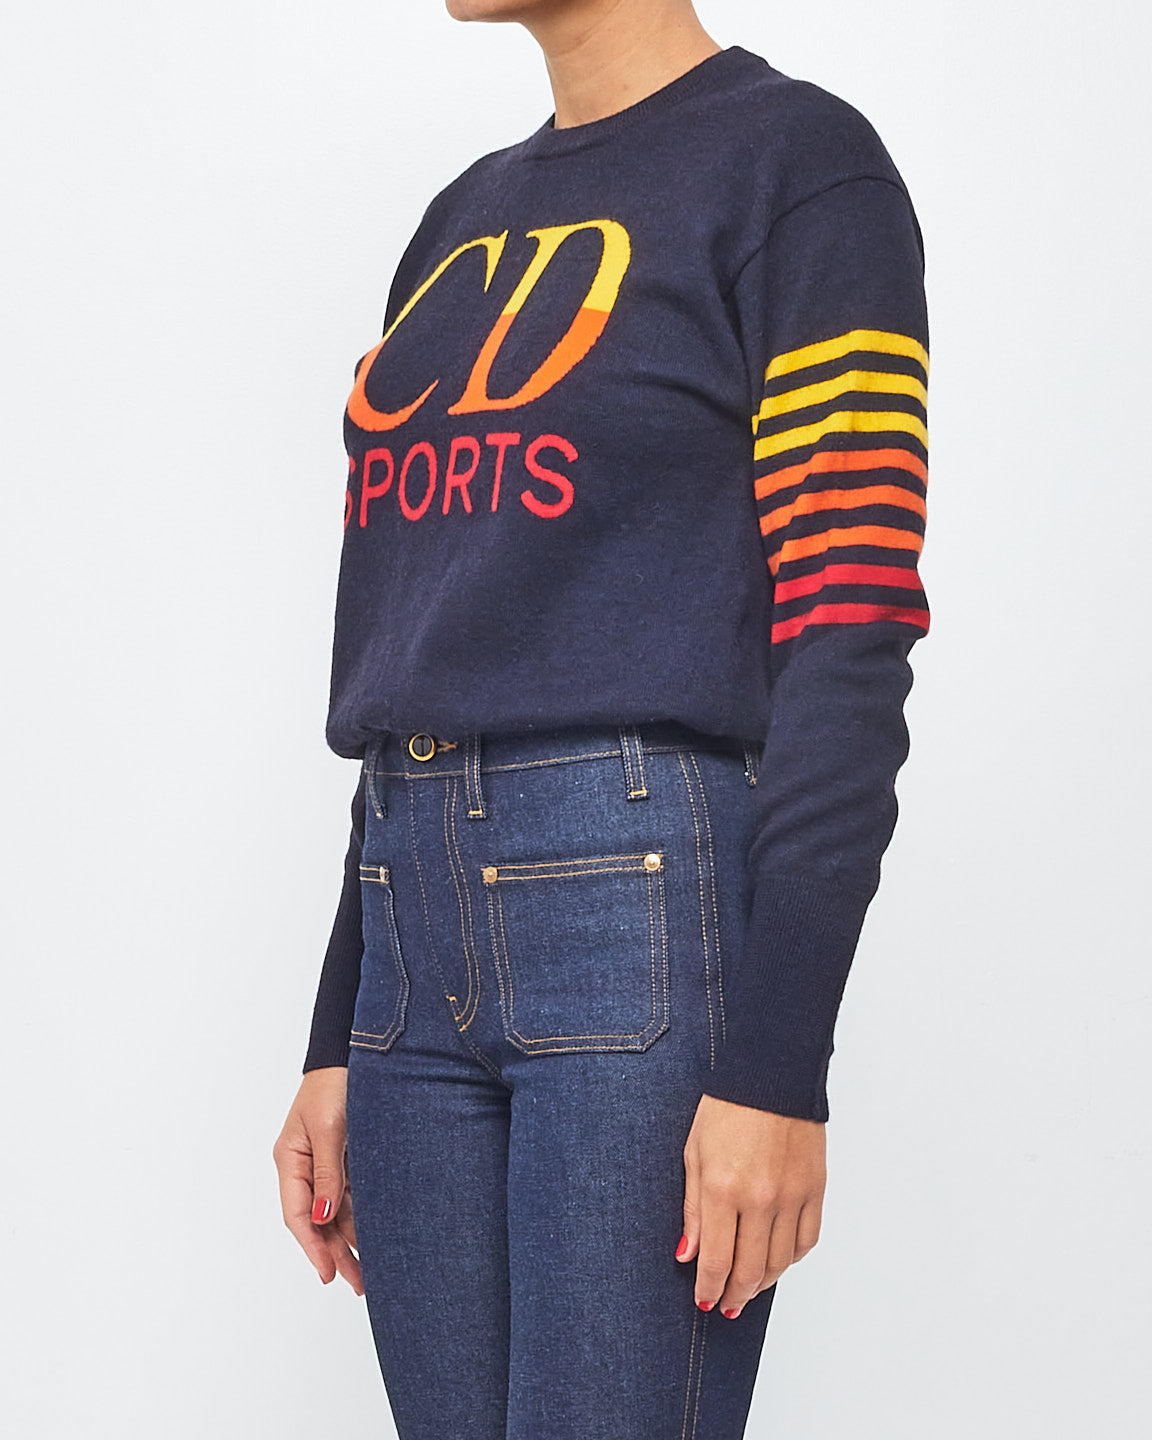 Dior Vintage Navy CD Sports Logo Sweater - M